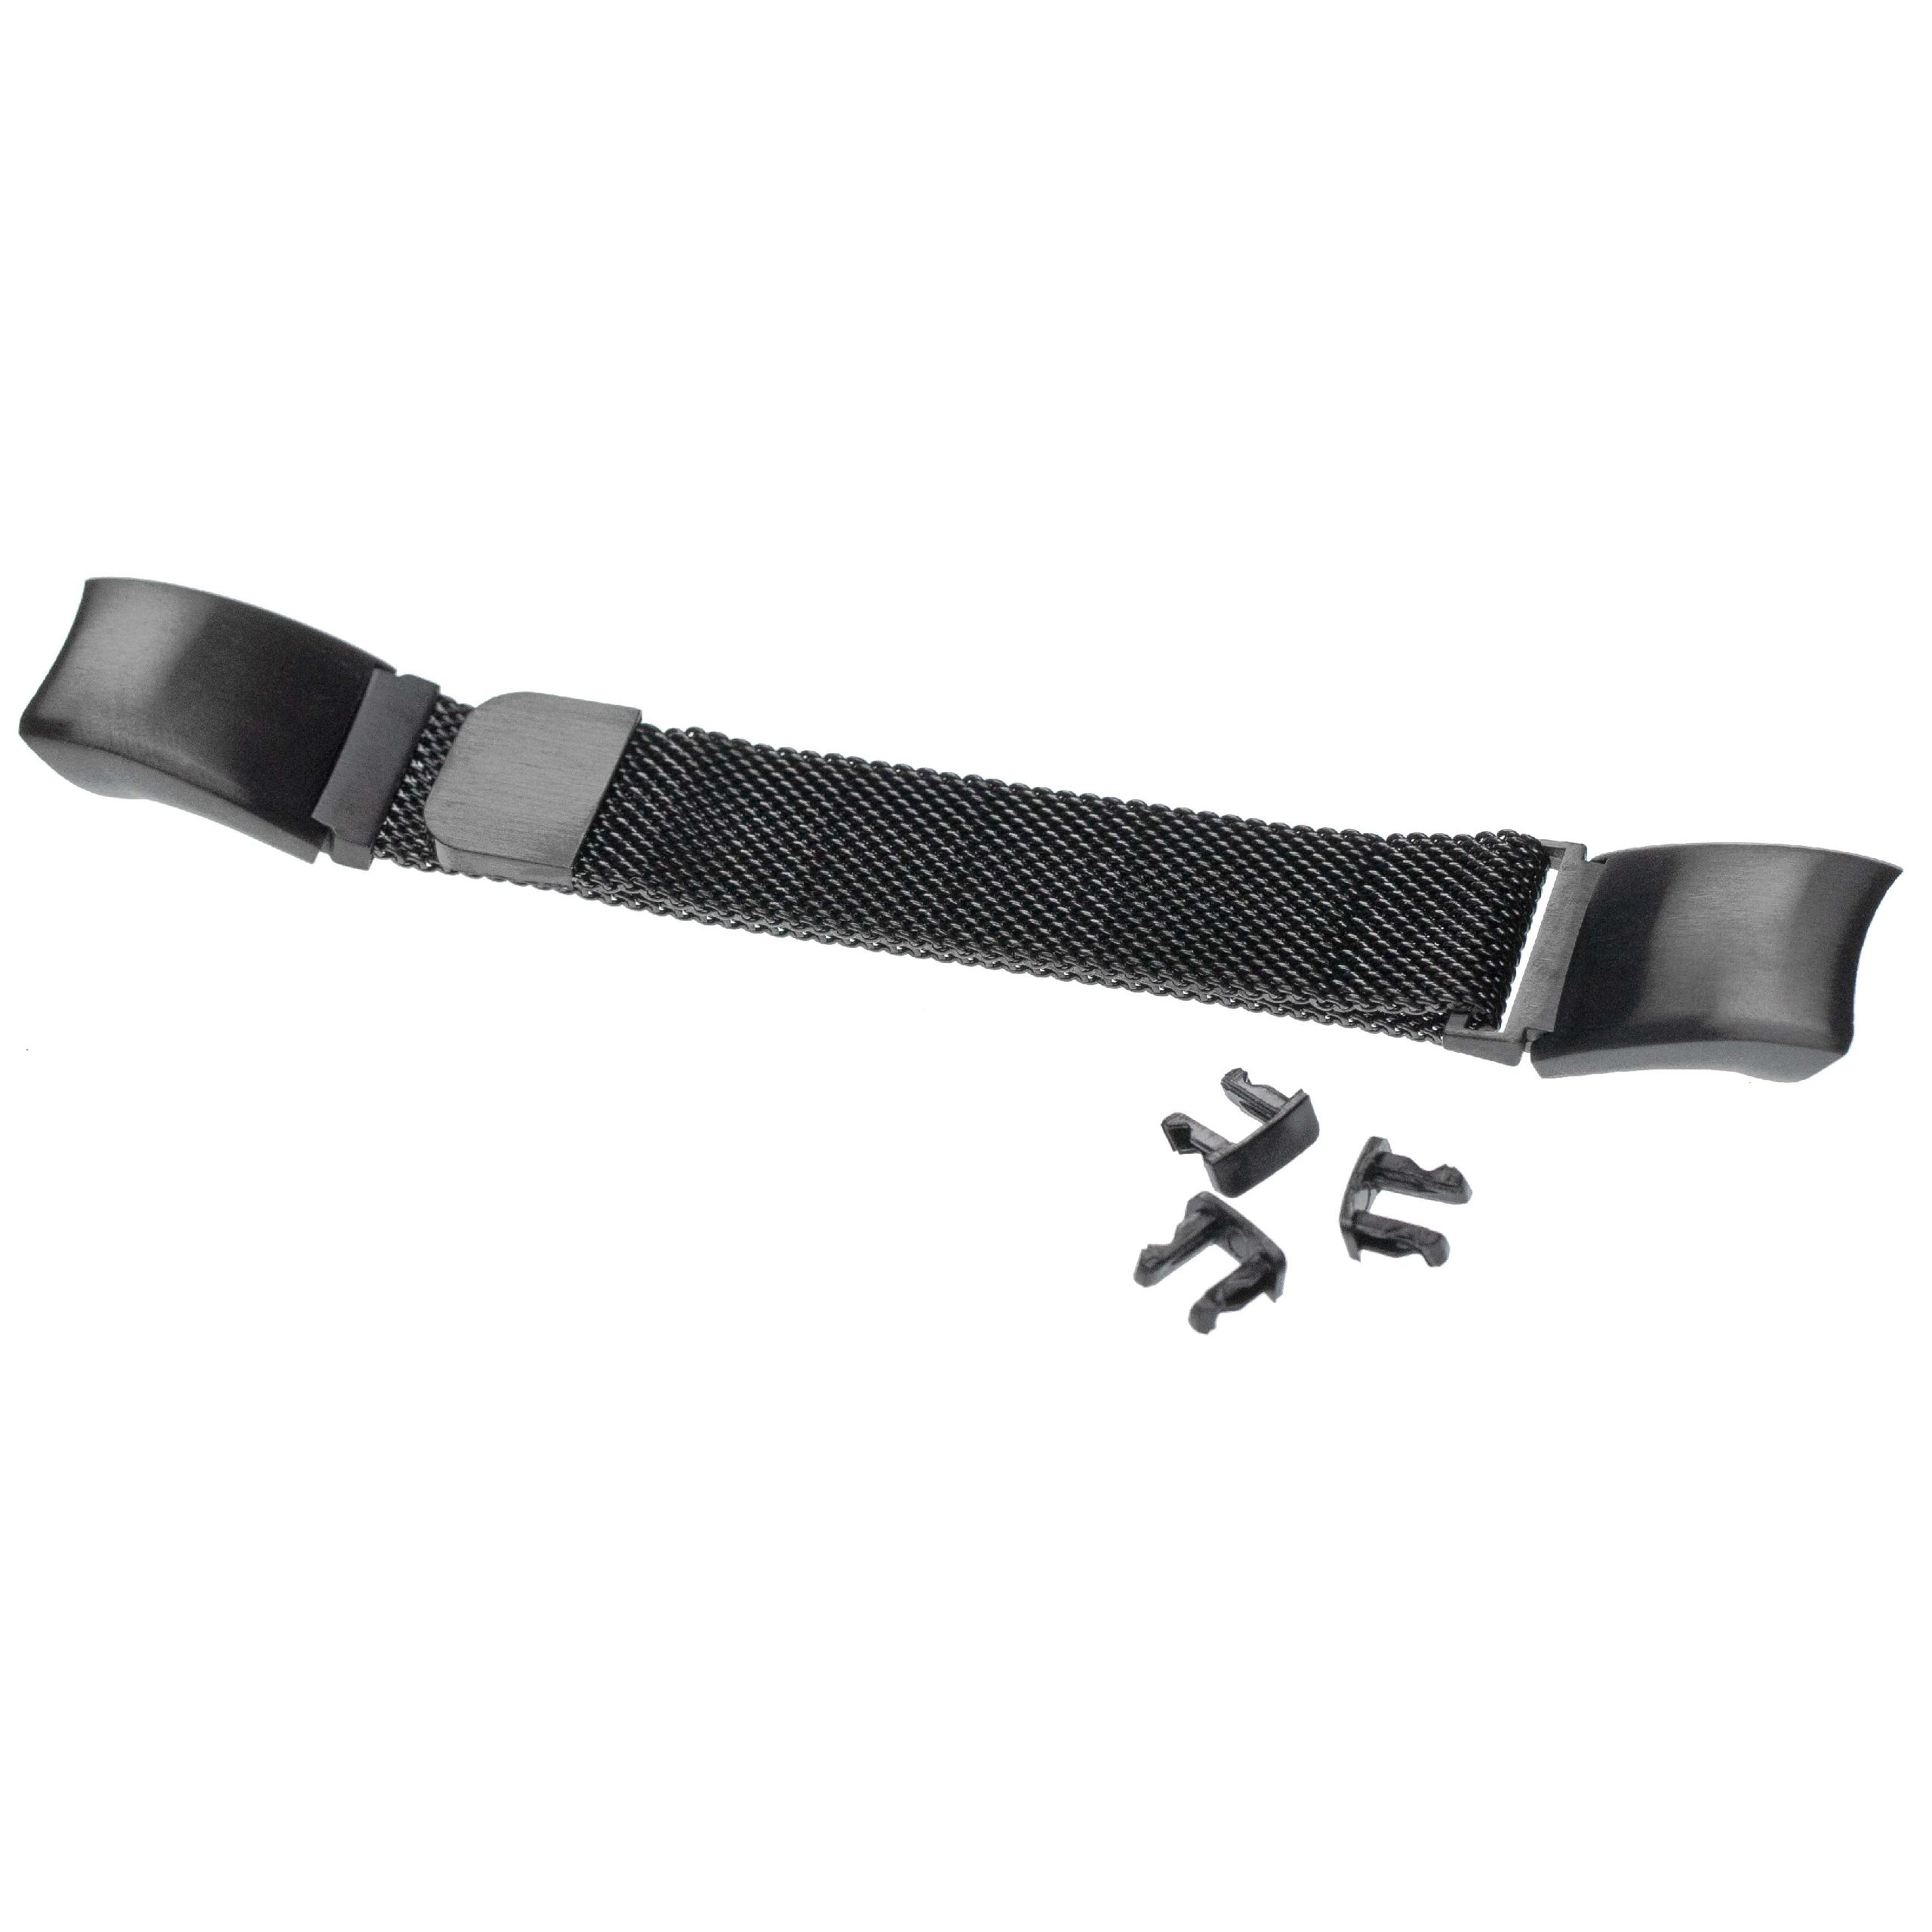 cinturino per Huawei Honor Band 4 / Honor Band 5 Smartwatch - 23 cm lunghezza, 16mm ampiezza, acciaio inox, ne